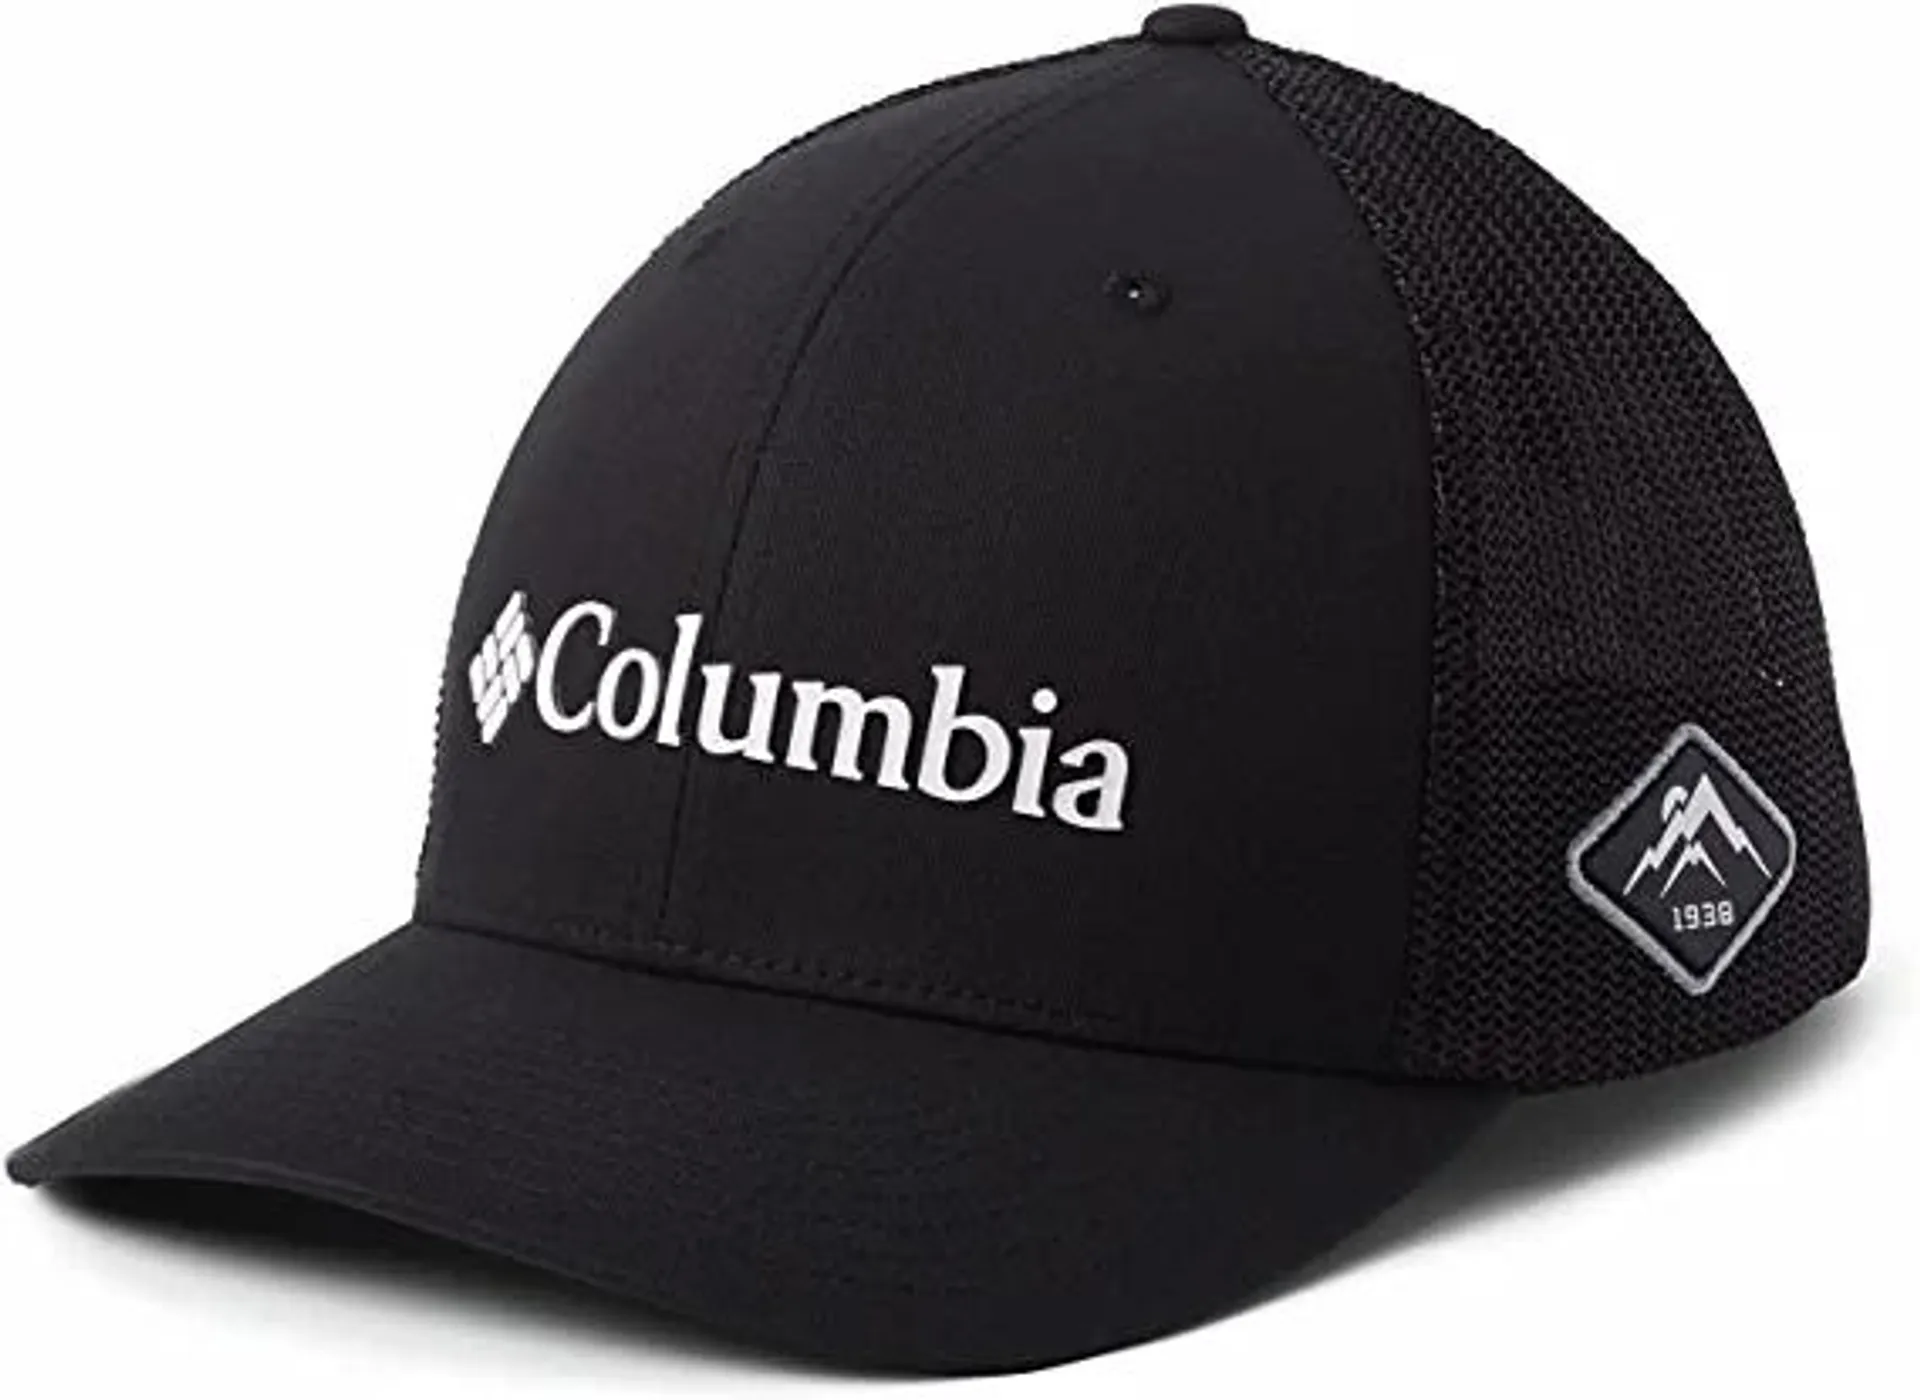 Columbia Unisex-Adult Mesh Ballcap